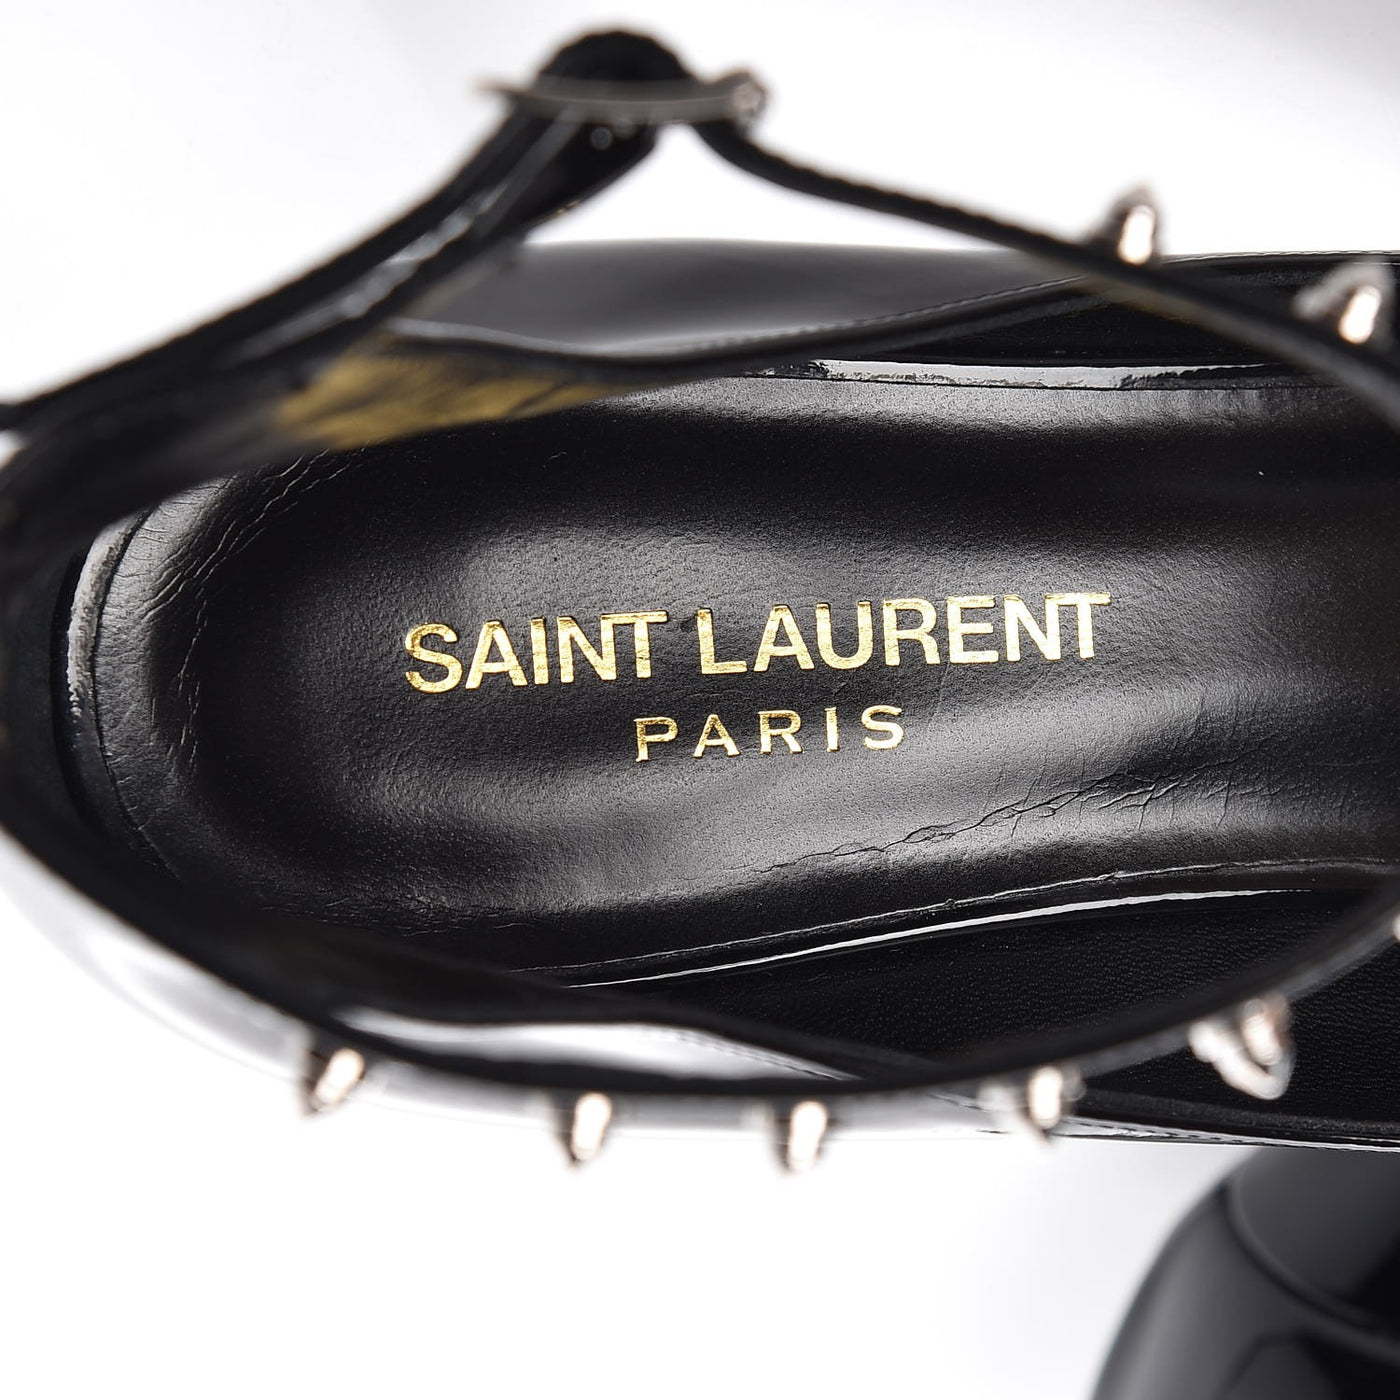 Saint Laurent kitten studded heels size 39- Never Worn